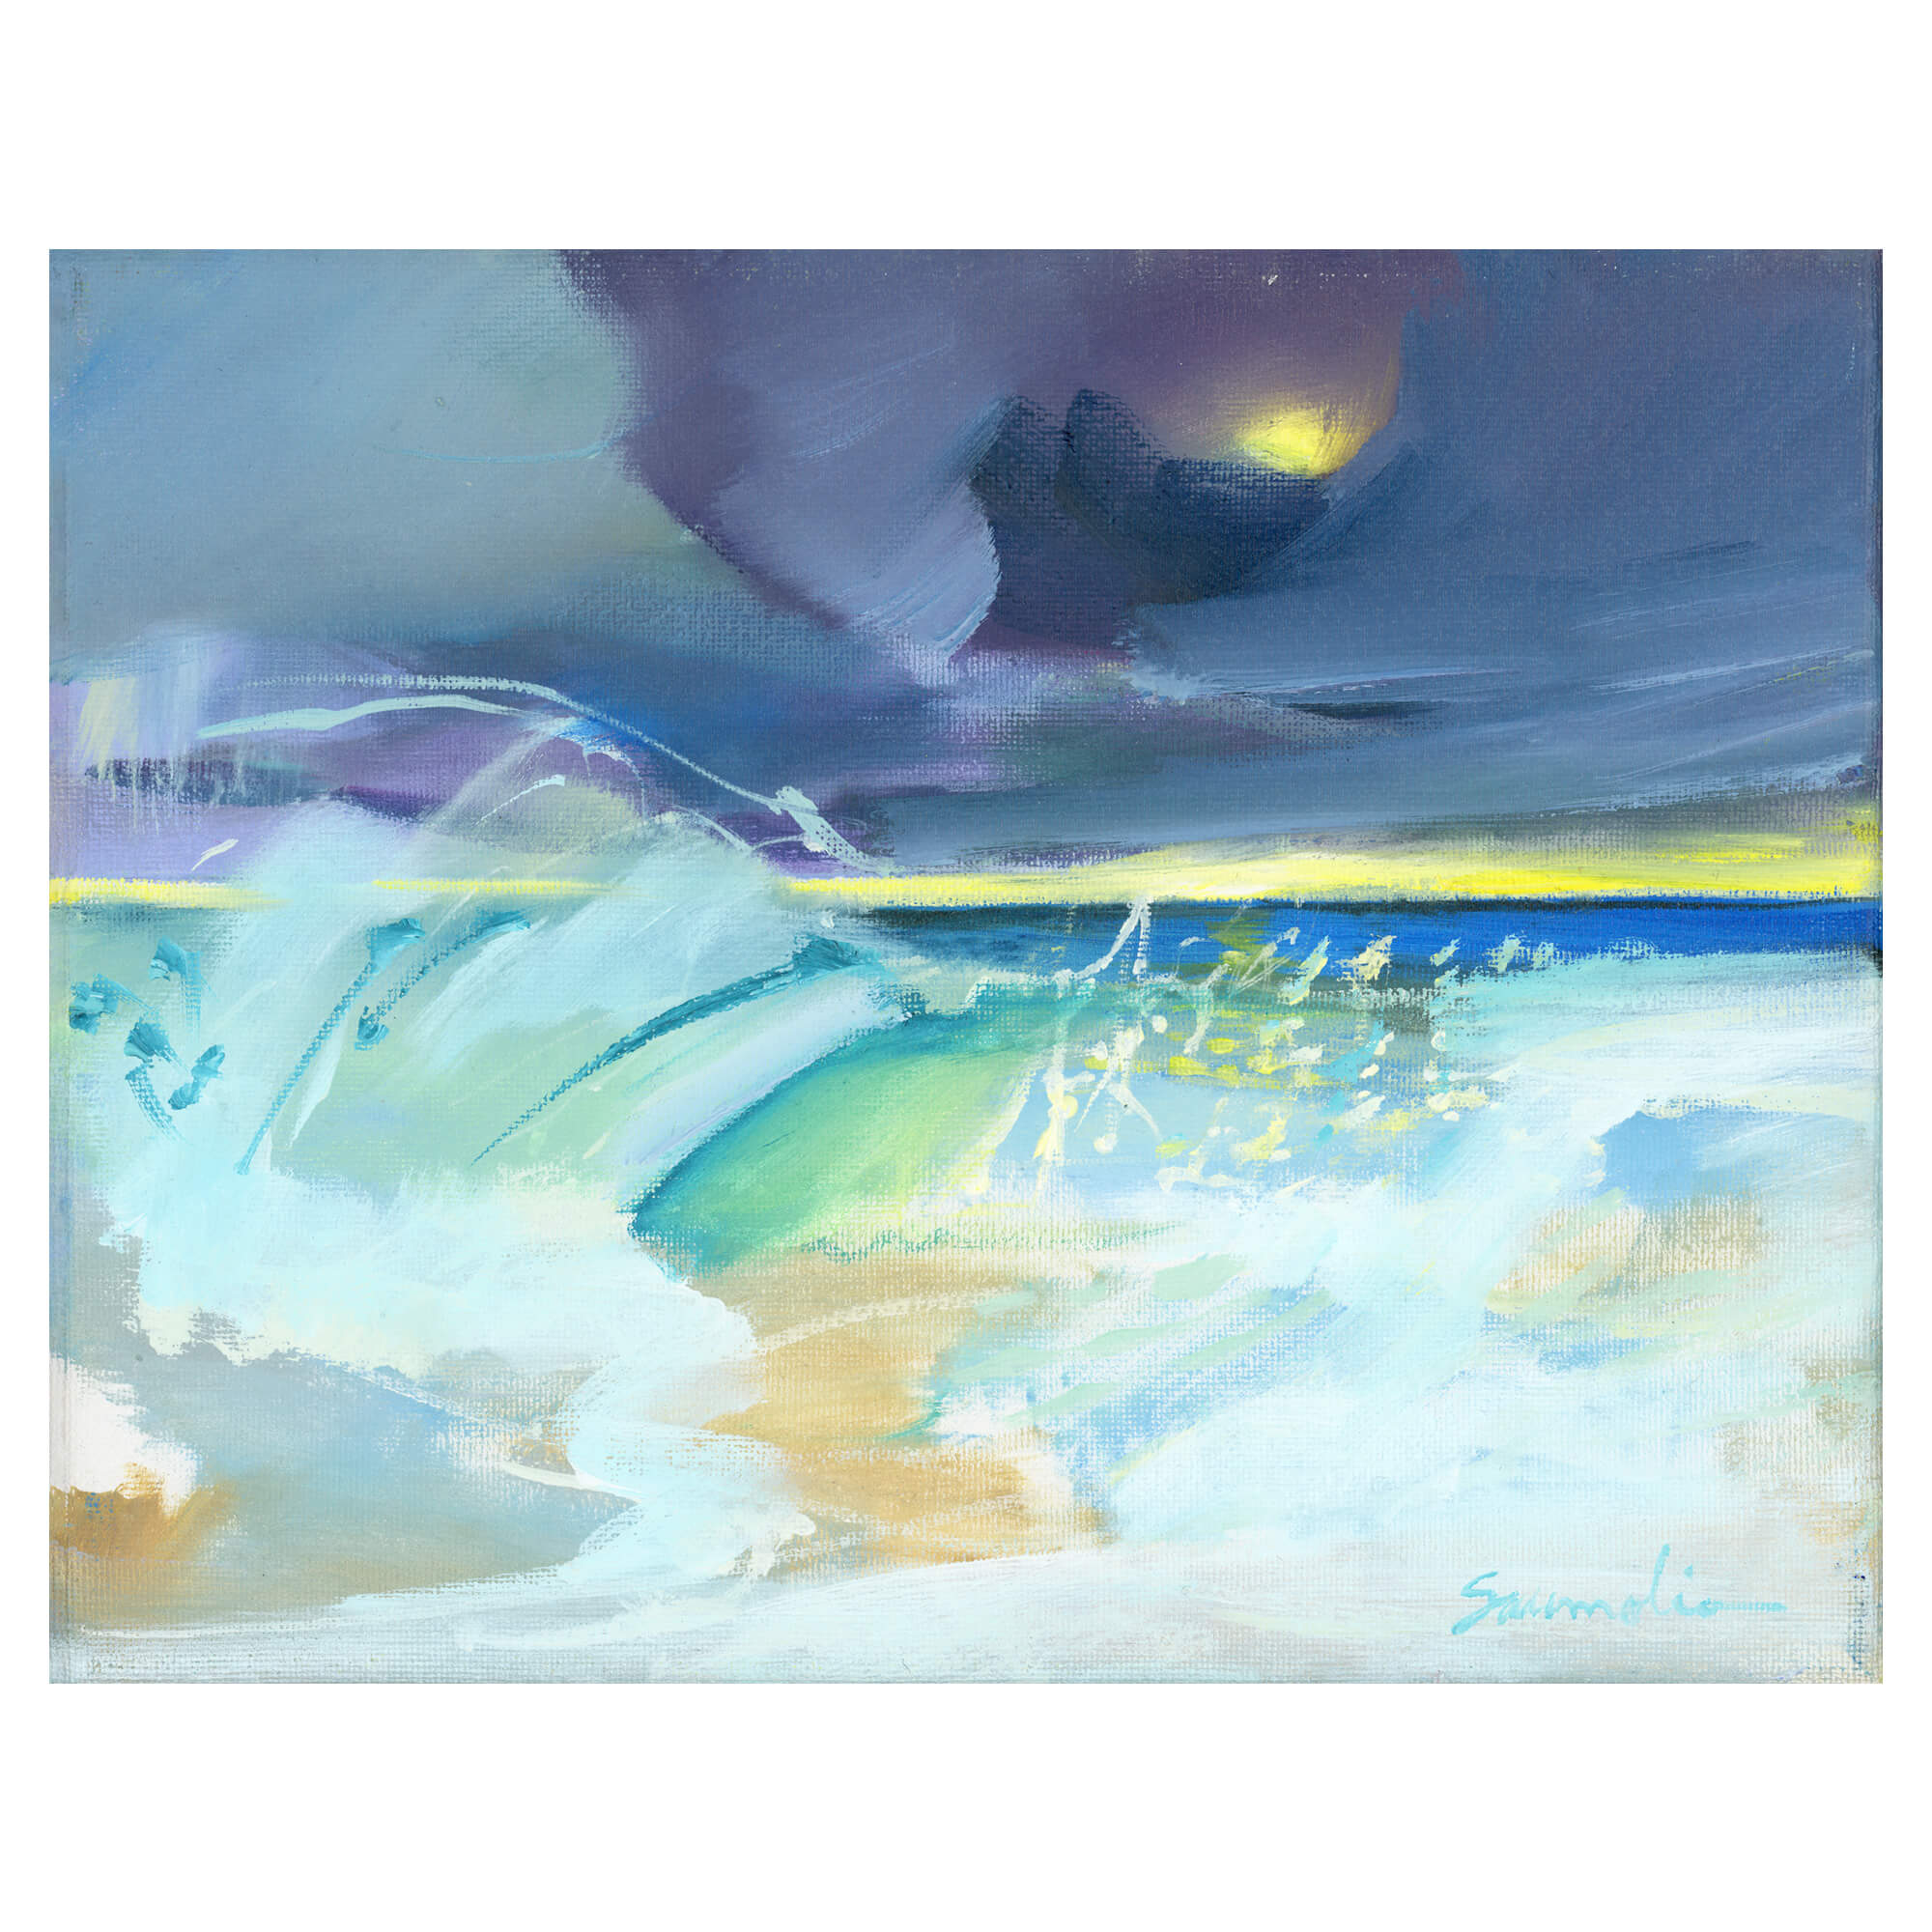 Vibrant teal-hued crashing waves and dark blue clouds by Hawaii artist Saumolia Puapuaga